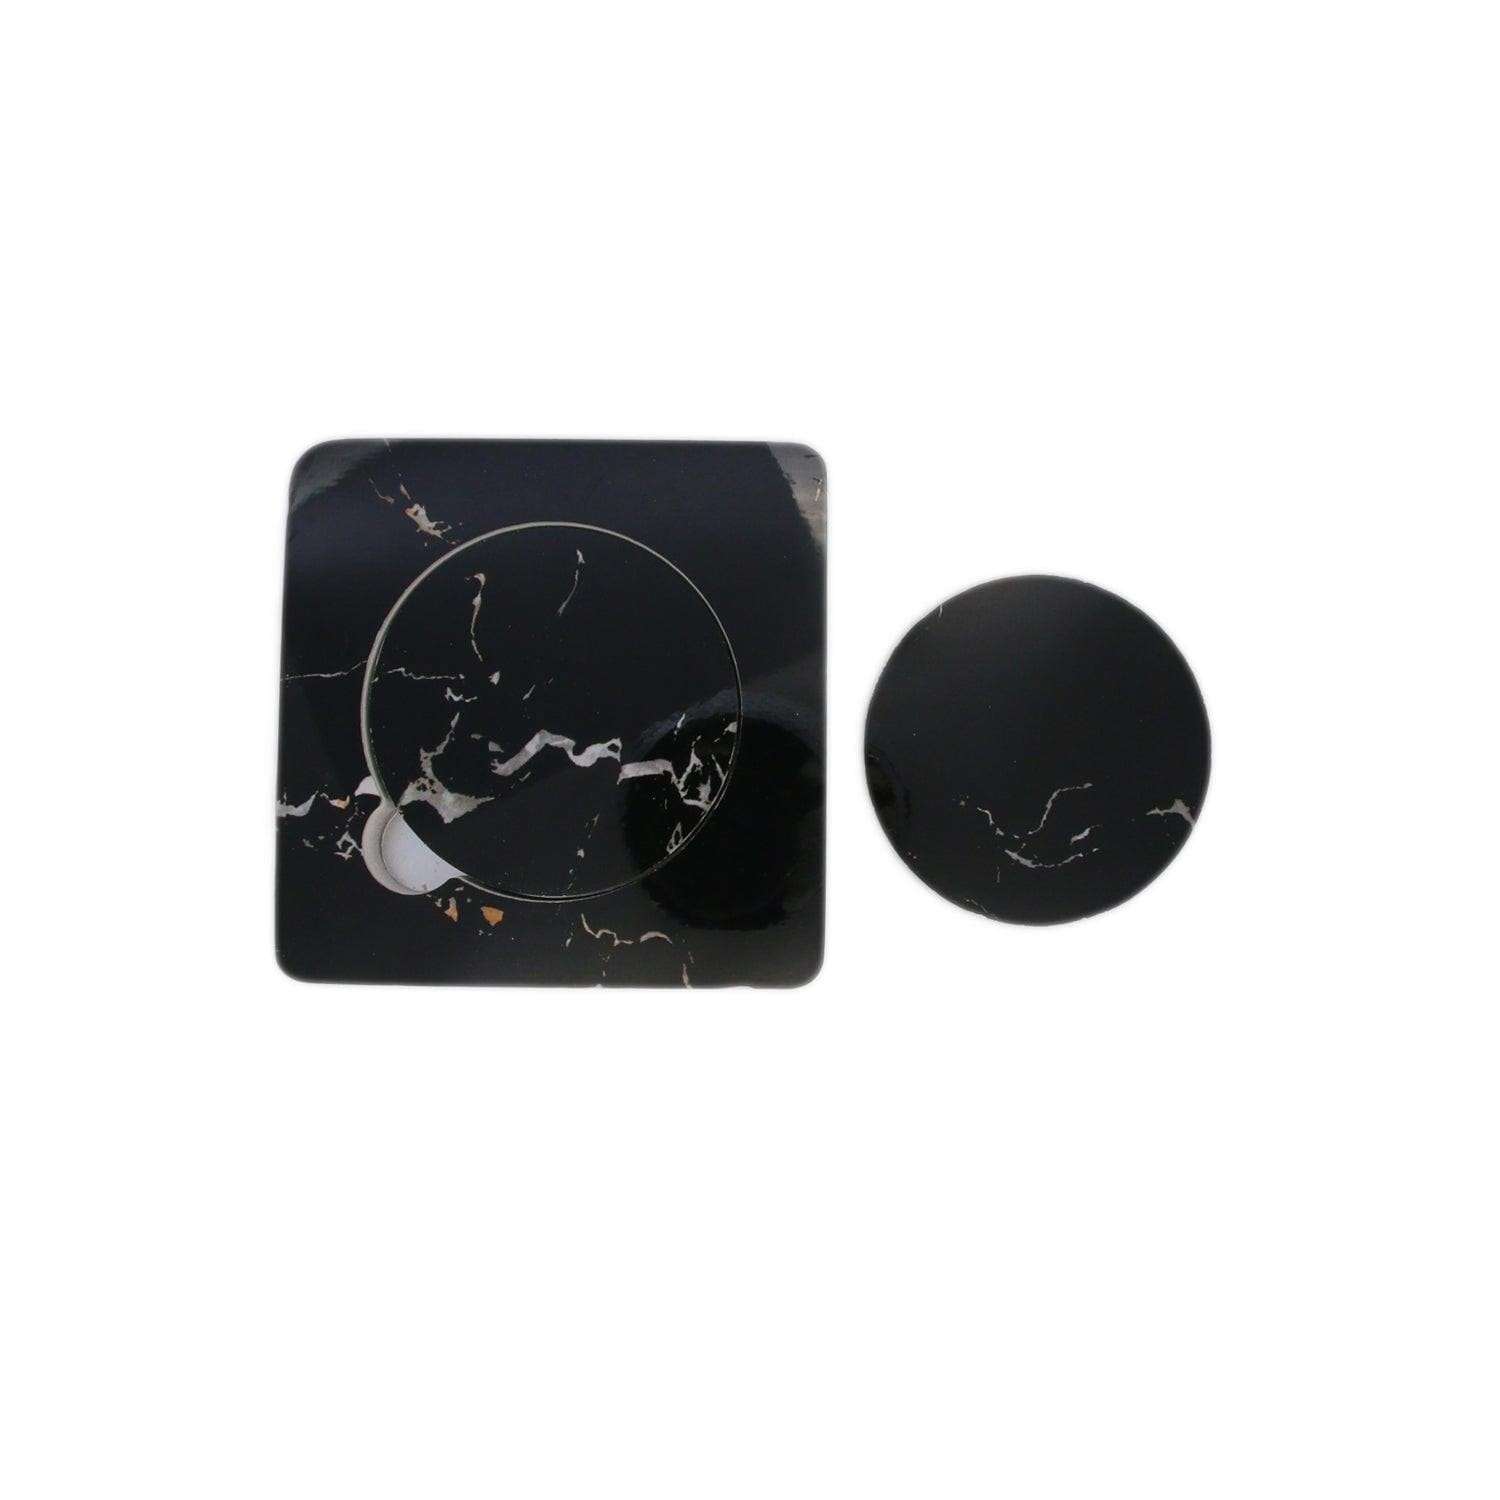 Designer Nero Portoro Black Marble Tile 6 Coaster Set with Holder (Round)